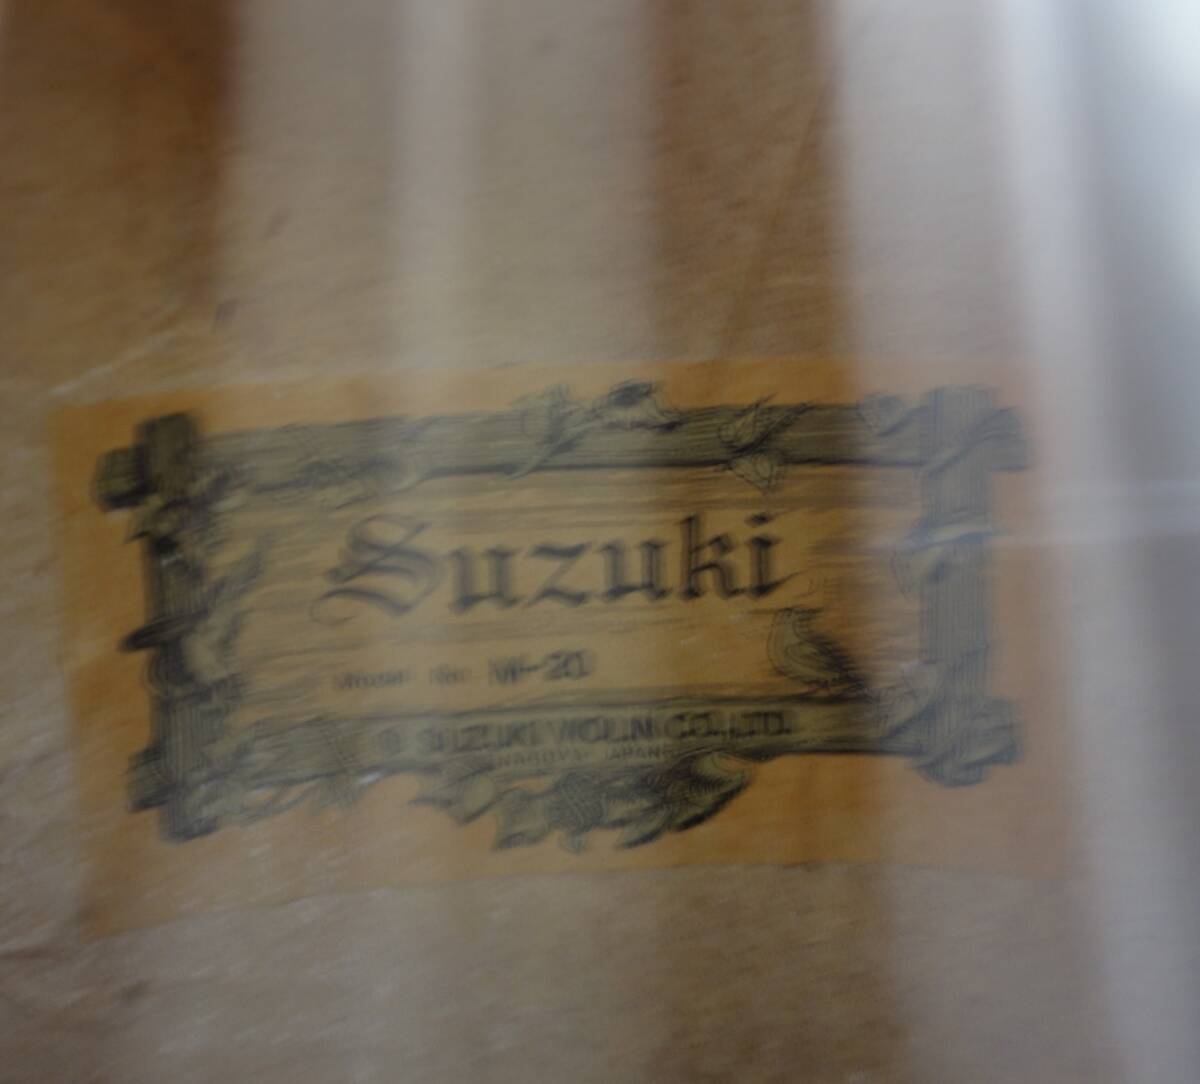  retro музыка подлинная вещь струнные инструменты *SUZUKI VIOLIN CO.LTD Suzuki скрипка Suzuki * мандолина *MODEL NO.M20 * перевозка коробка приложен 